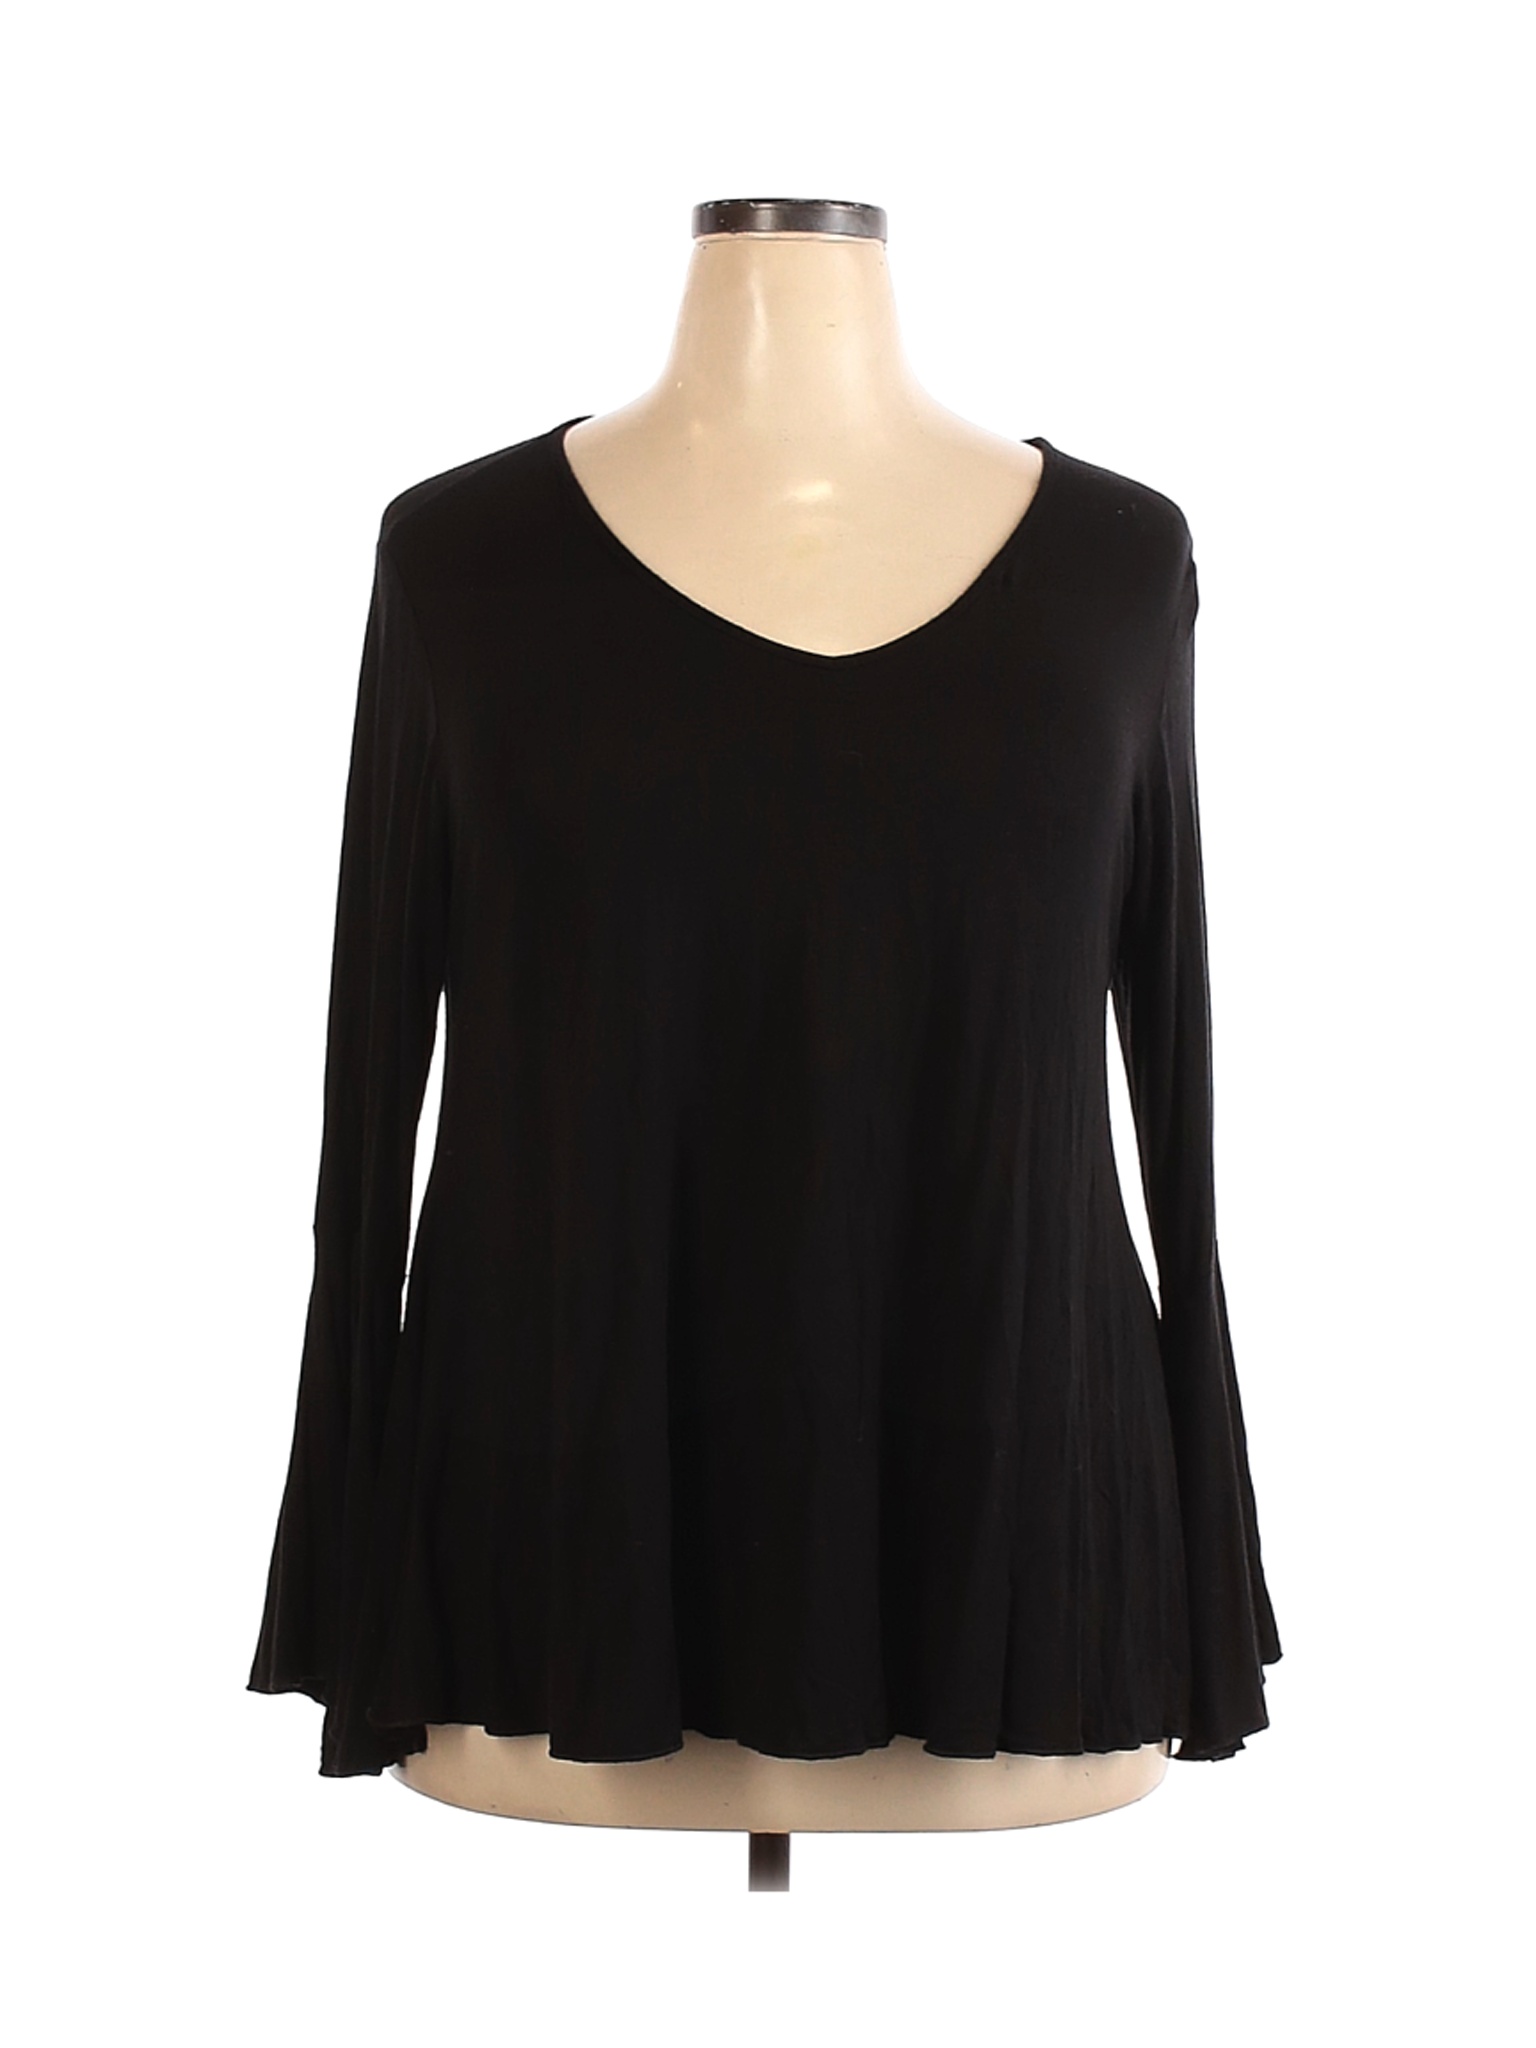 Kim & Cami Women Black Long Sleeve Top 2X Plus | eBay